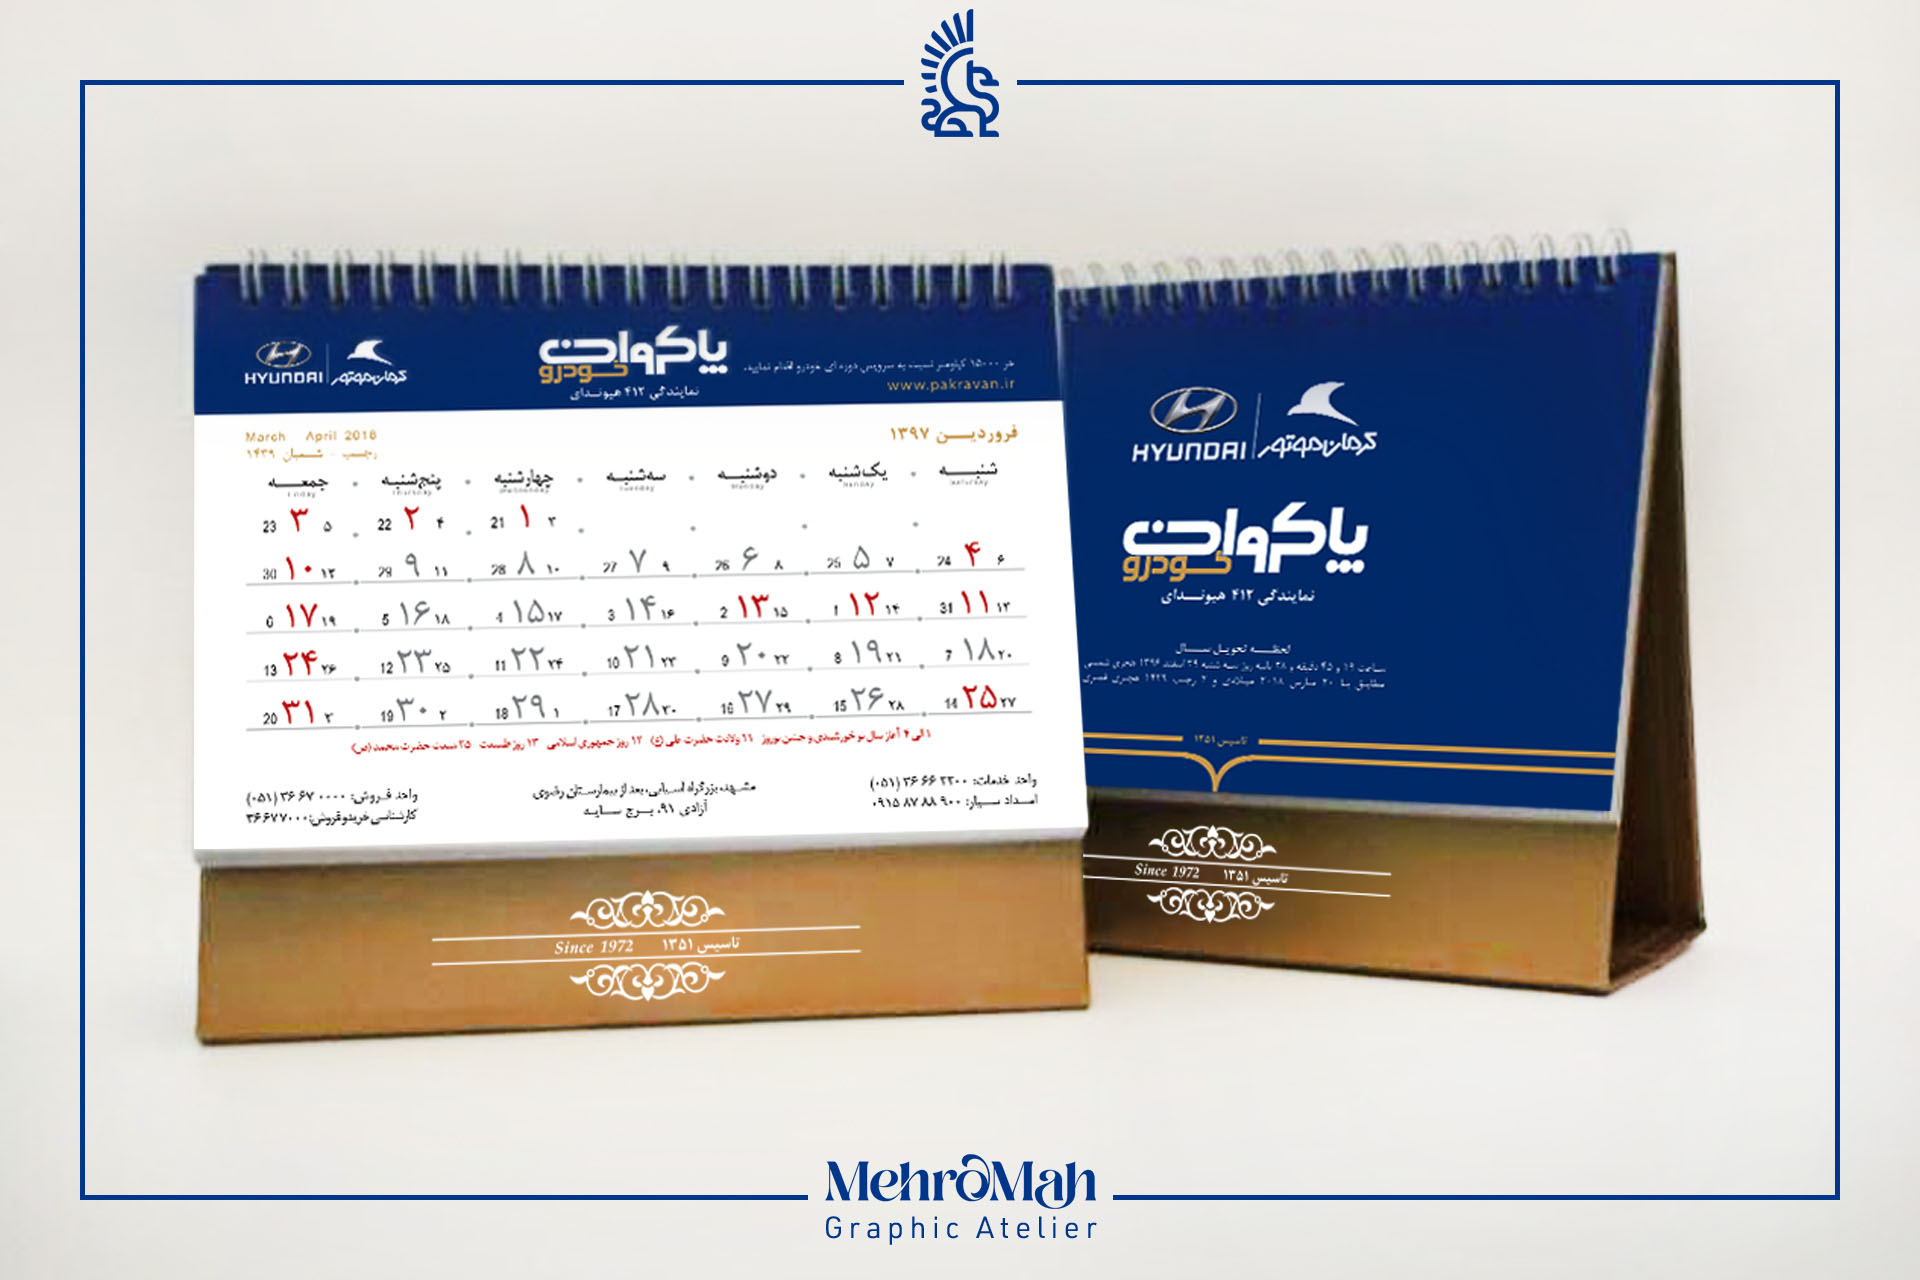 Pakravan Khodro - Hyundai Dealer & After-sales Service Desktop Calendar